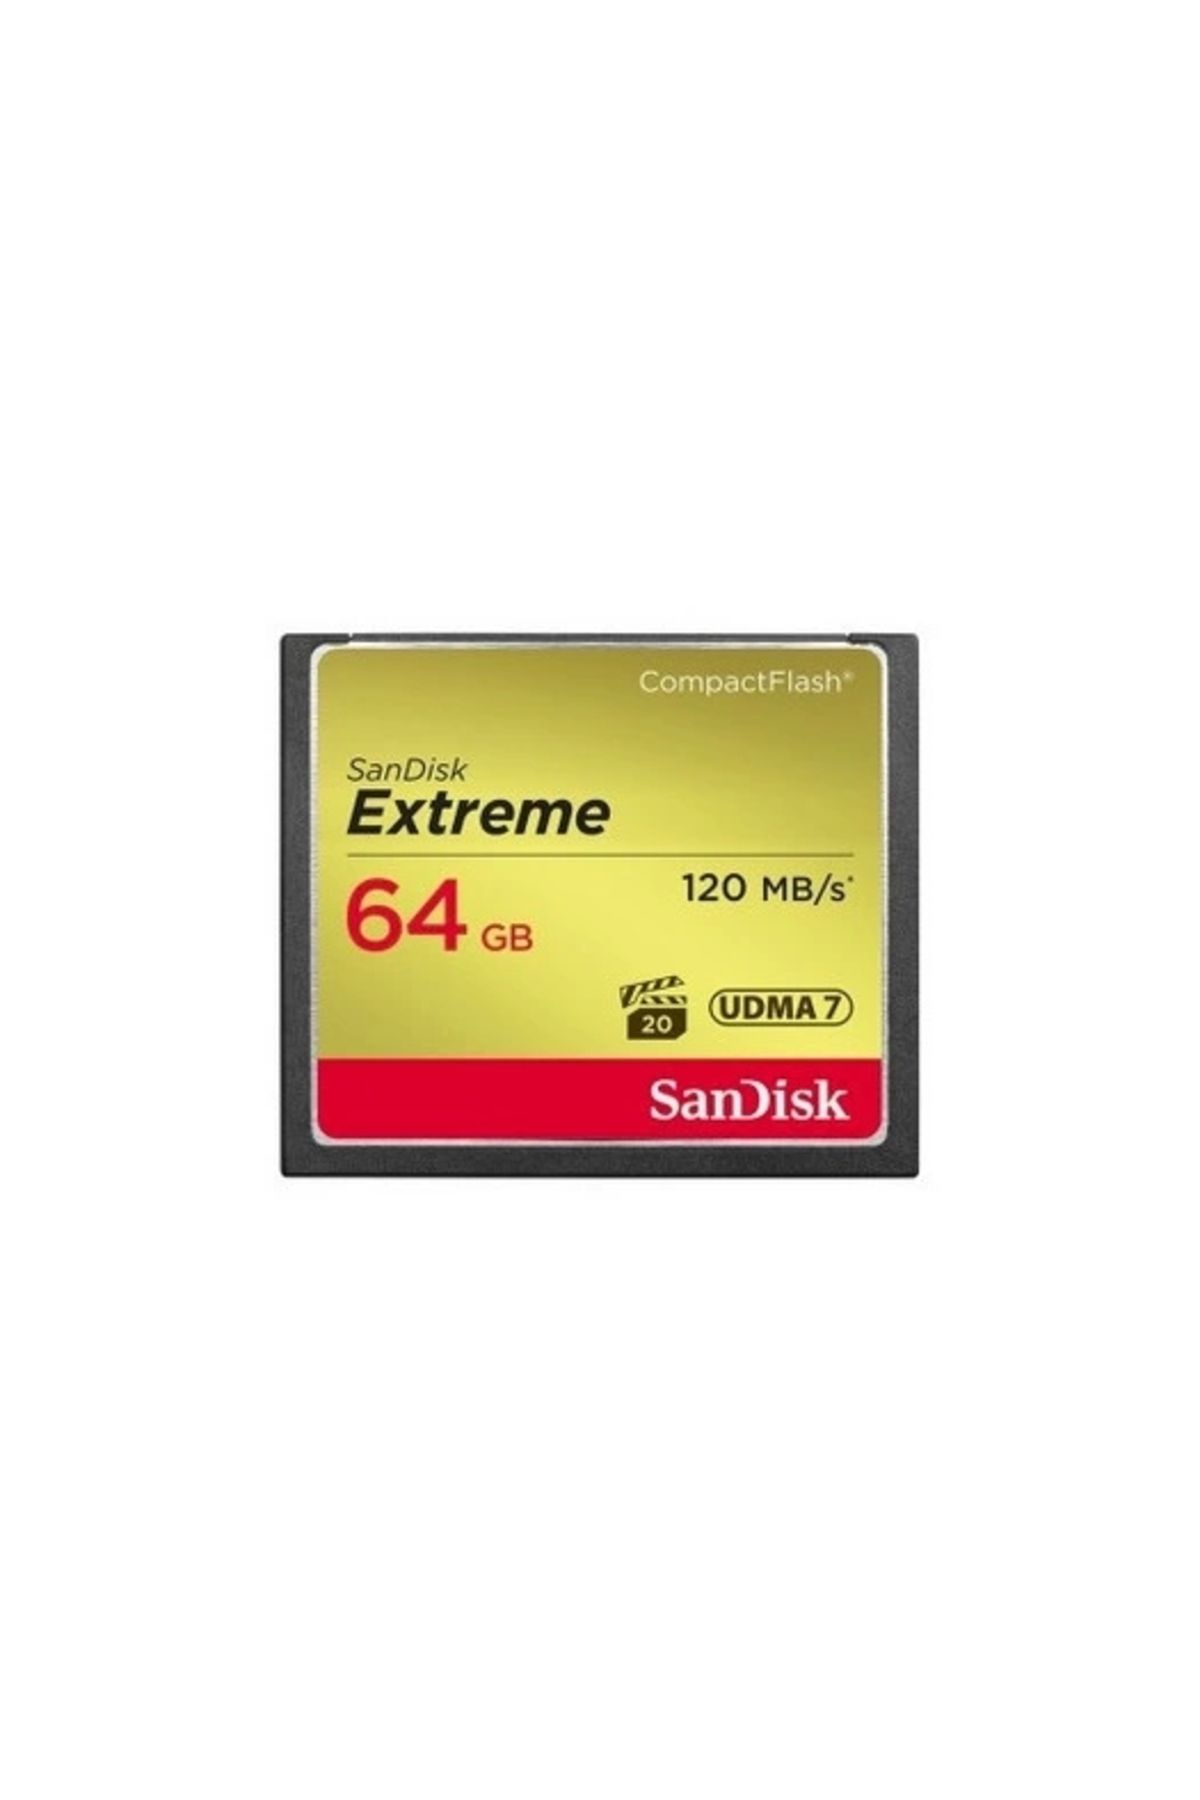 Sandisk Extreme Cf 120mb/s, 85mb/s Write, Udma7, 64gb